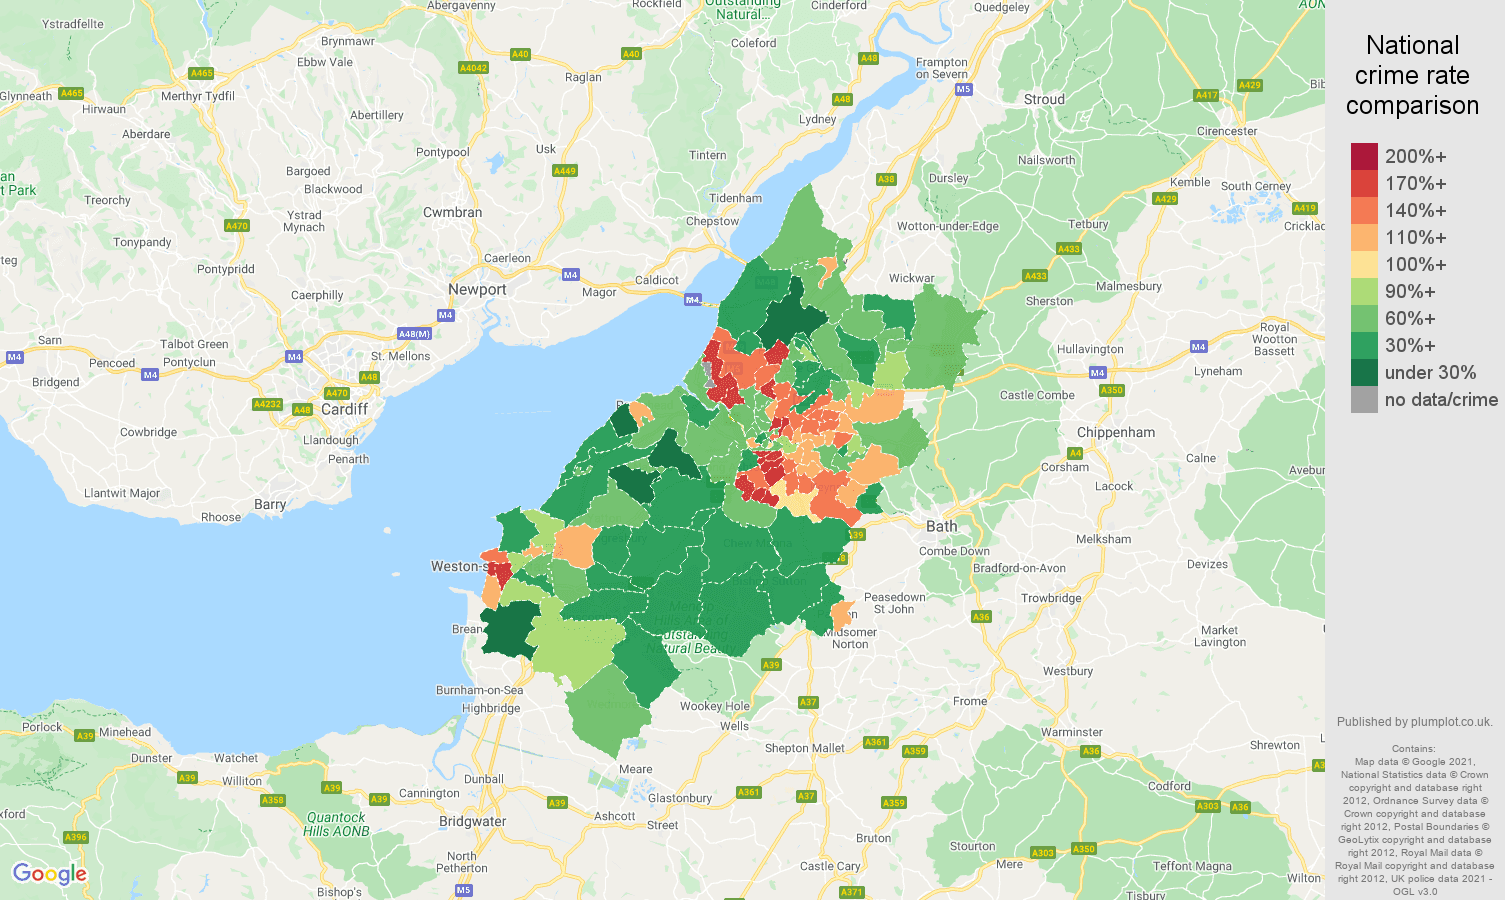 Bristol criminal damage and arson crime rate comparison map